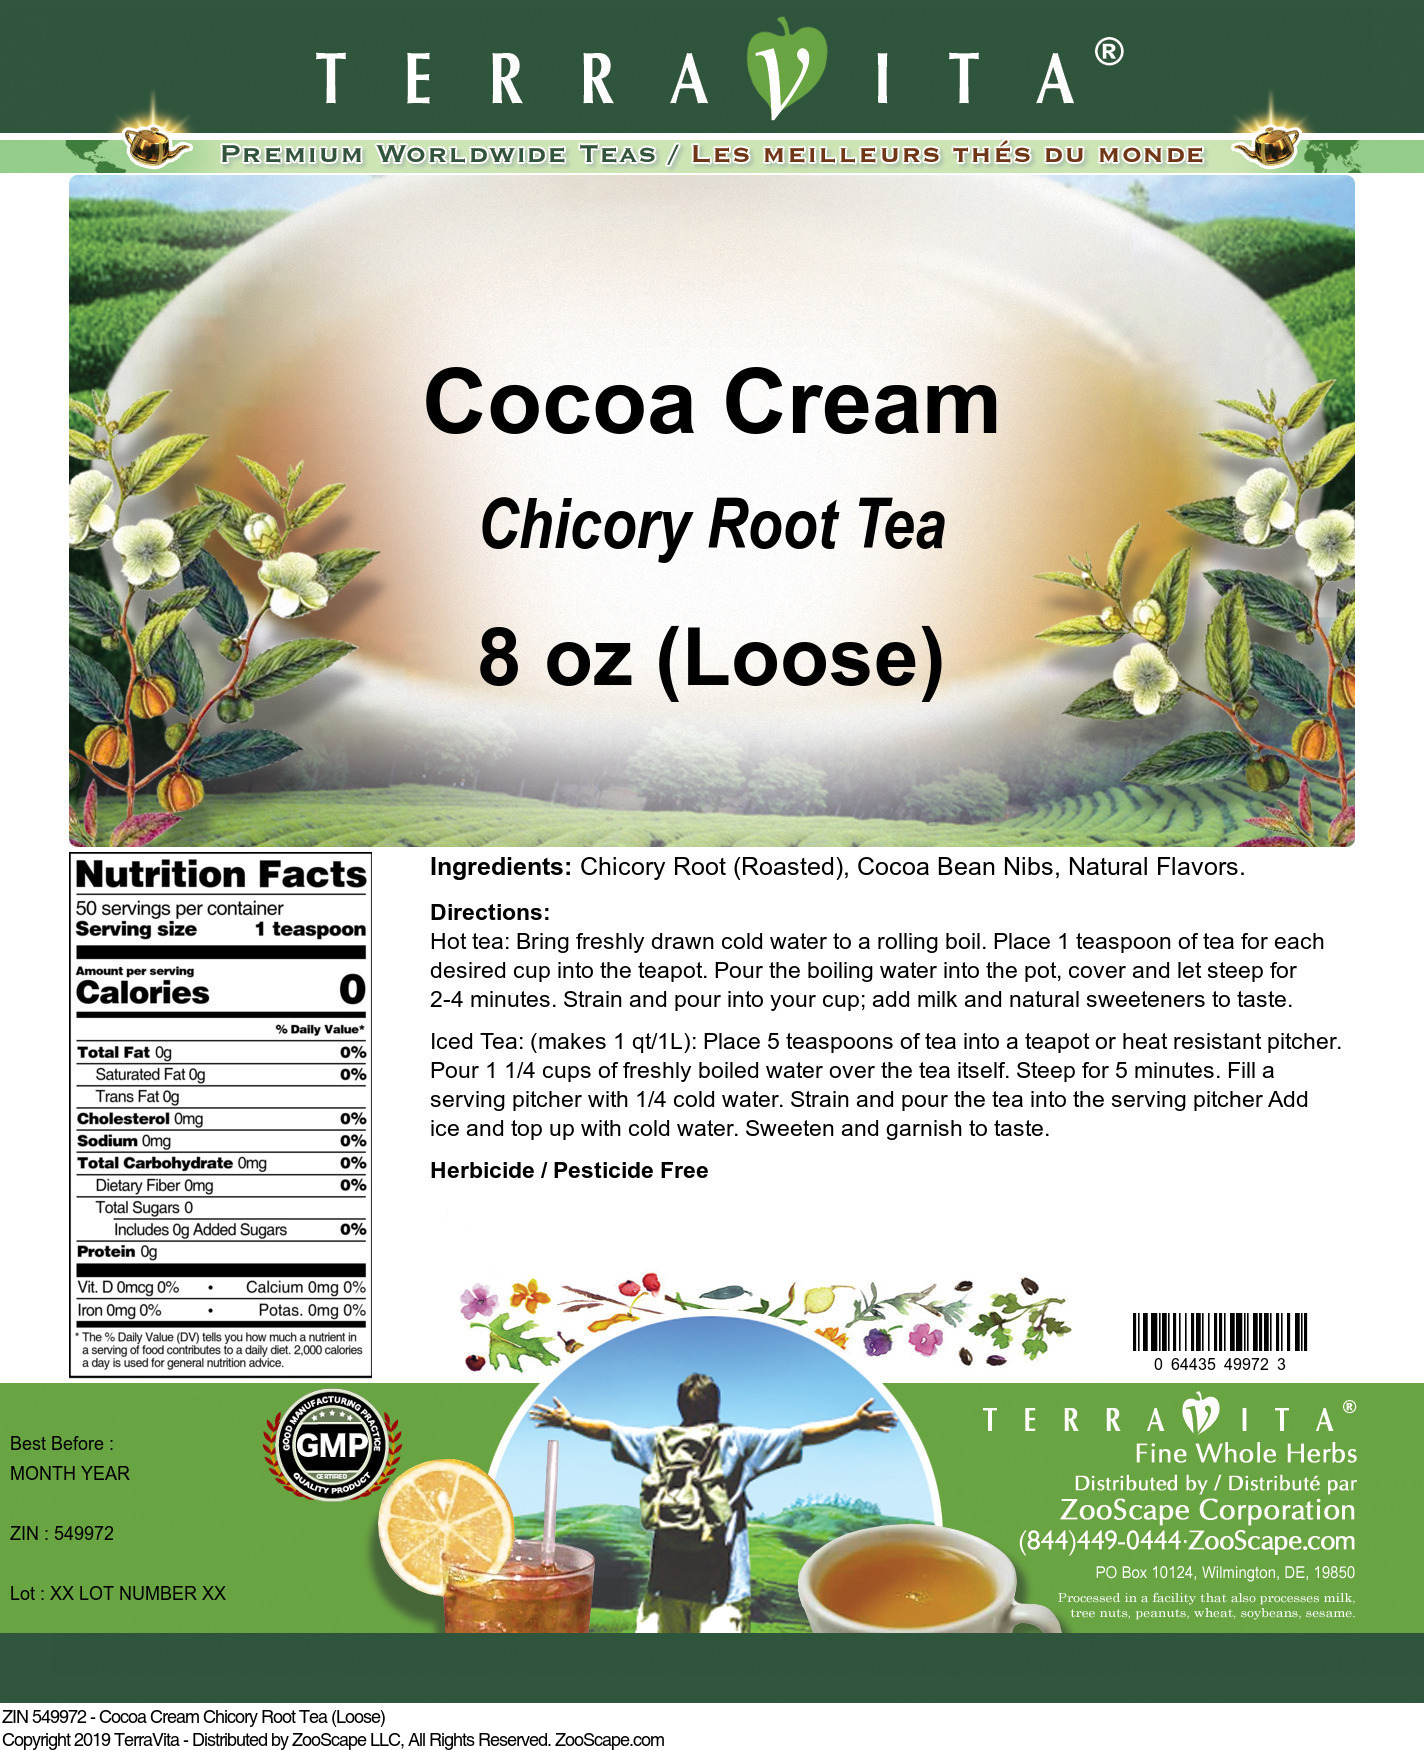 Cocoa Cream Chicory Root Tea (Loose) - Label